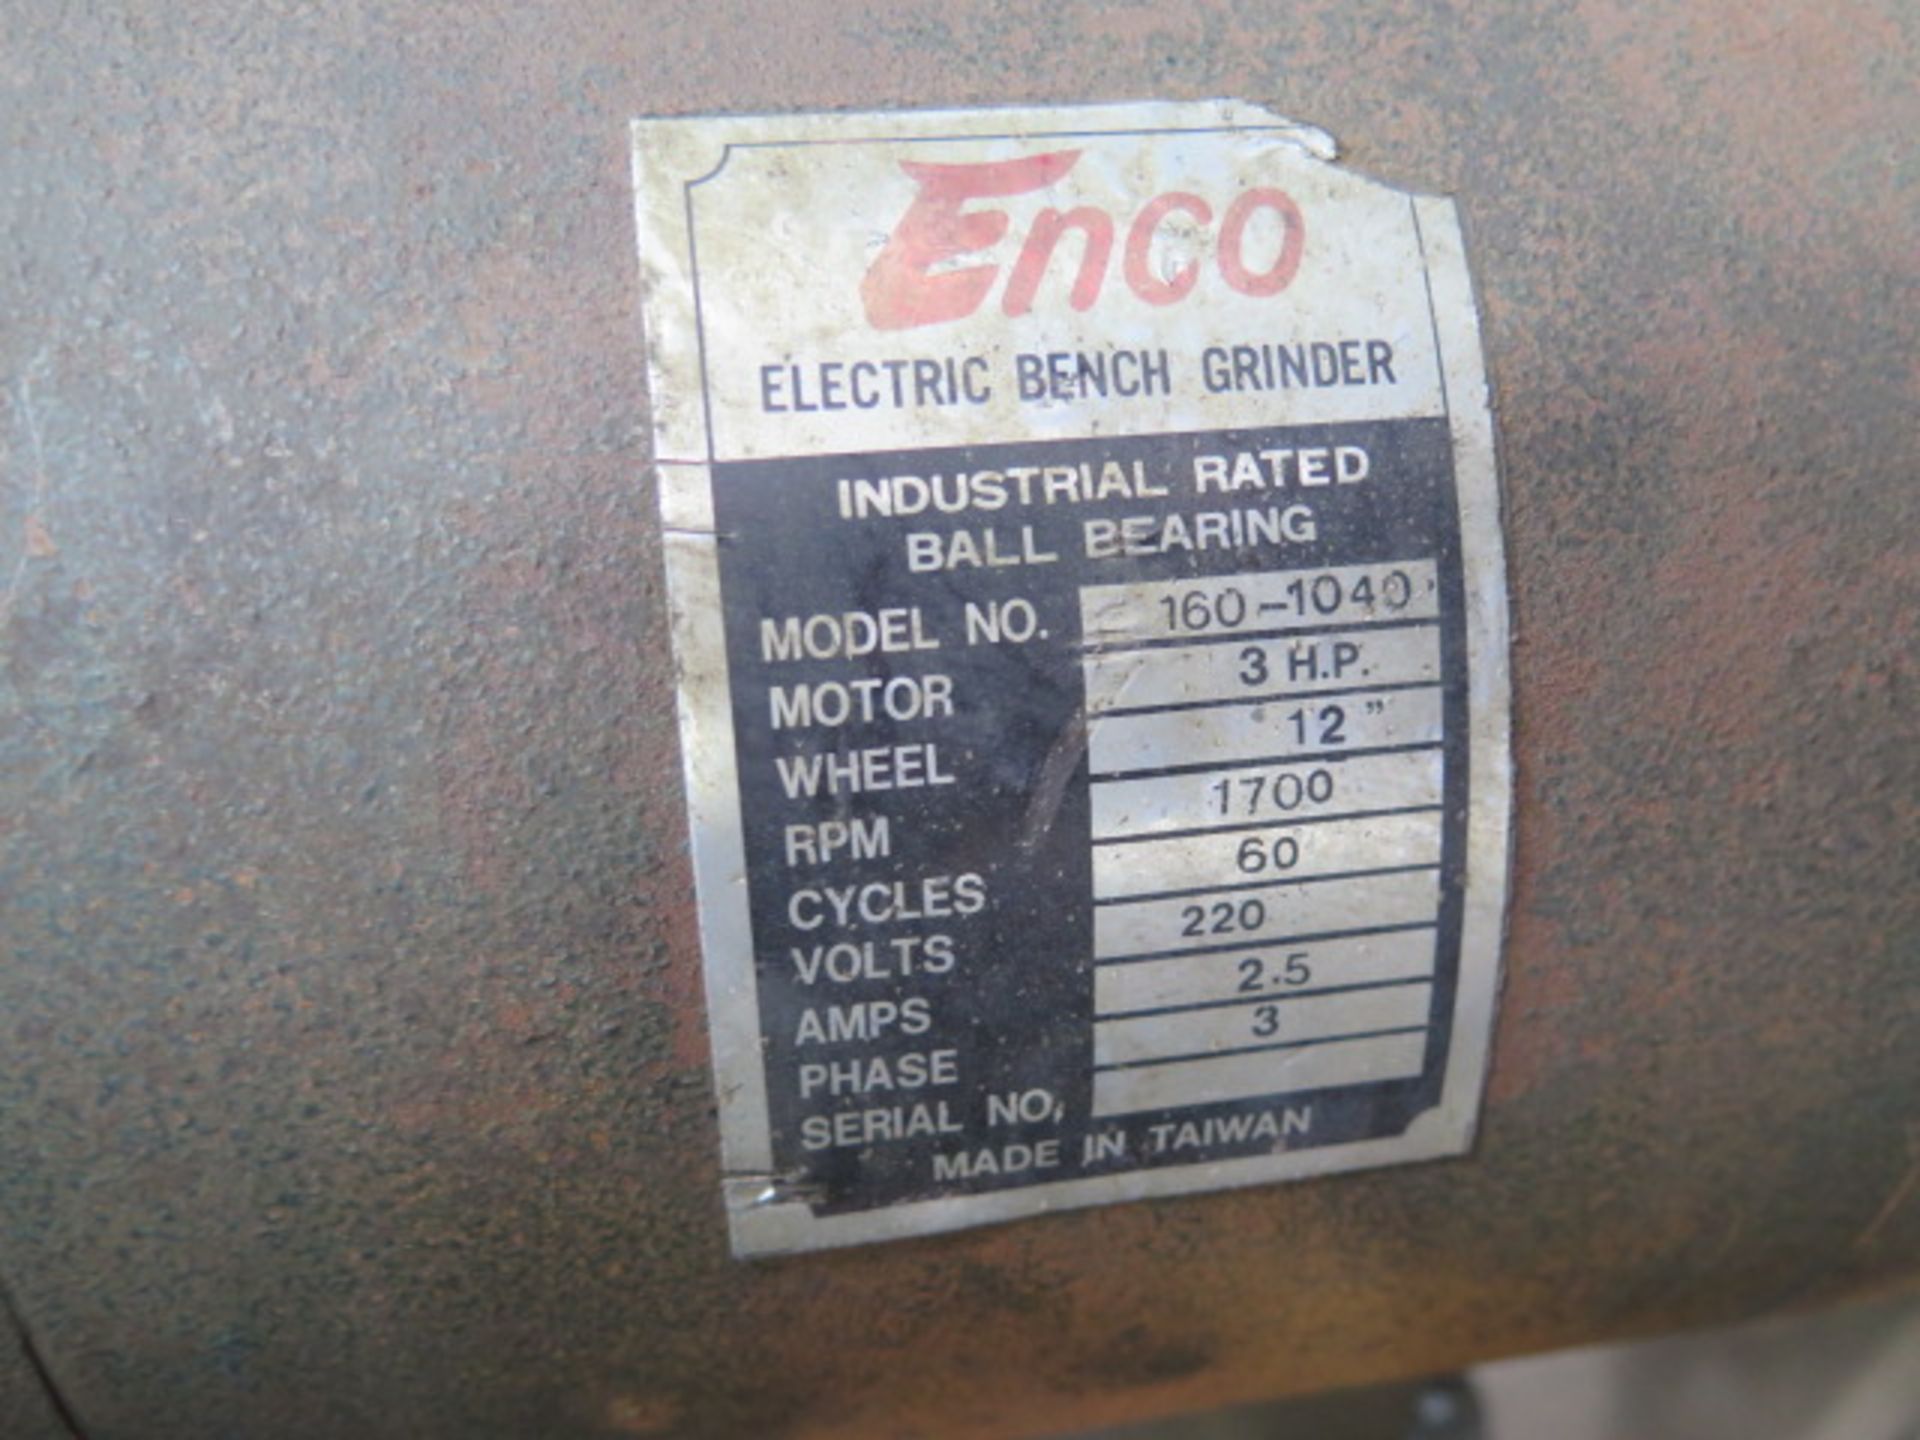 Enco 3Hp 12" Pedestal Grinder (SOLD AS-IS - NO WARRANTY) - Image 5 of 5